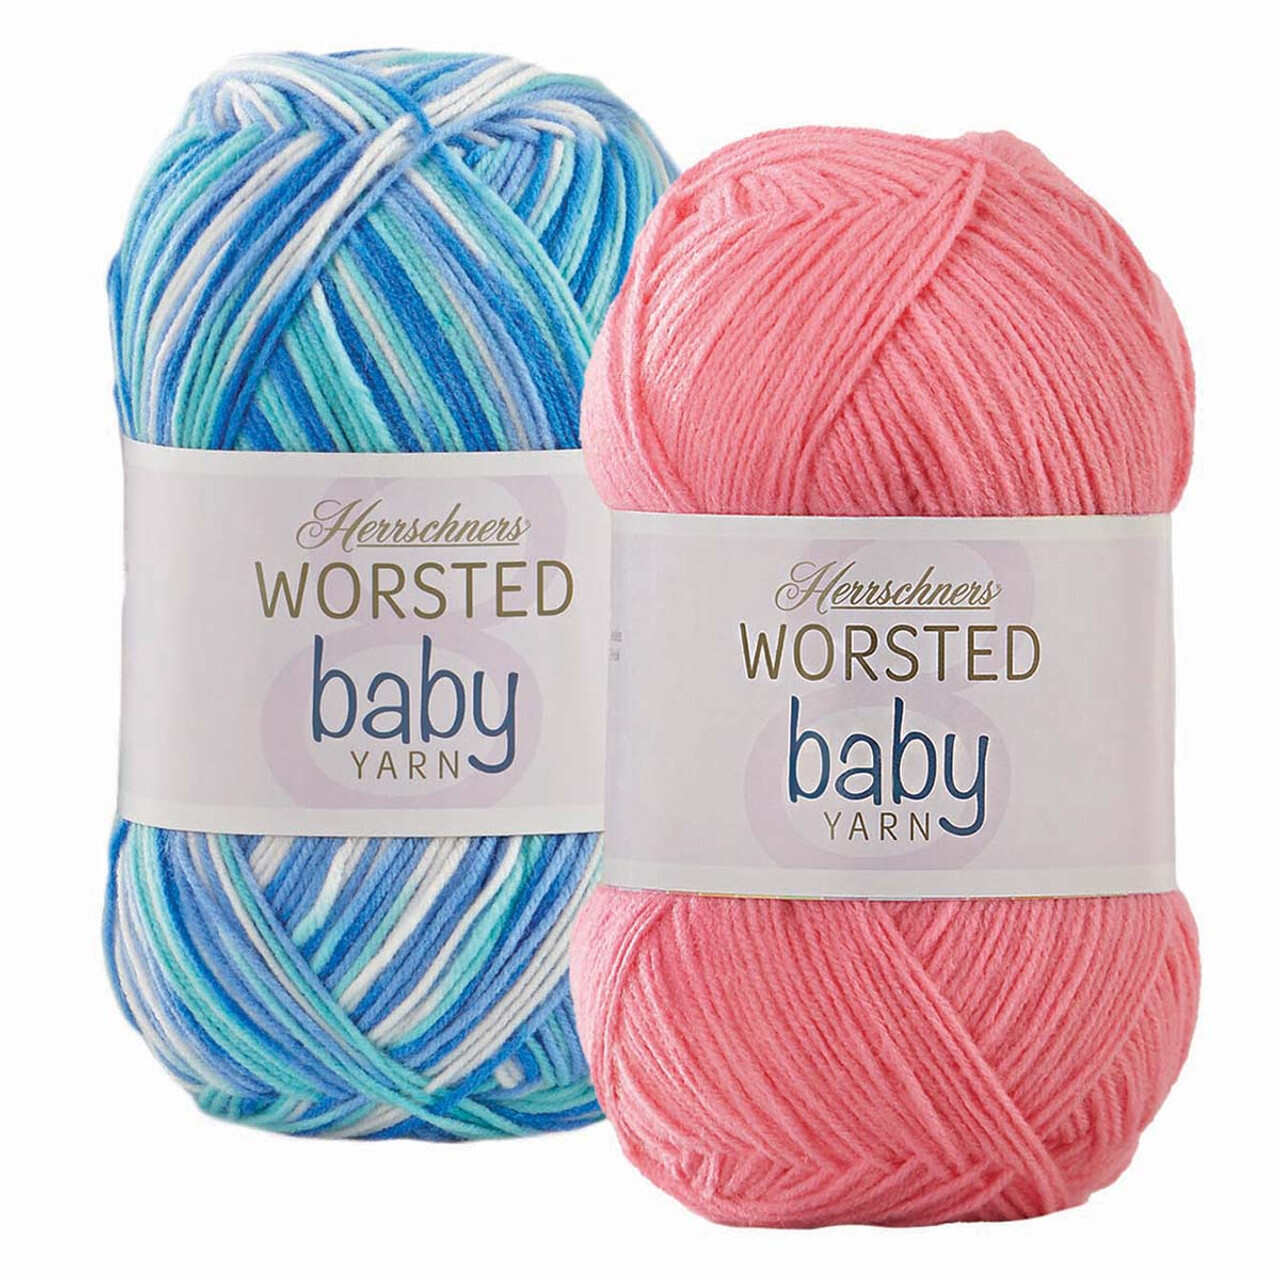 Fall Colors Yarn Bundle 12 Pcs Yarn Pack Yarn Set for Punch Needle, Crochet,  Amigurumi I Soft Cotton Acrylic Blend Yarn 